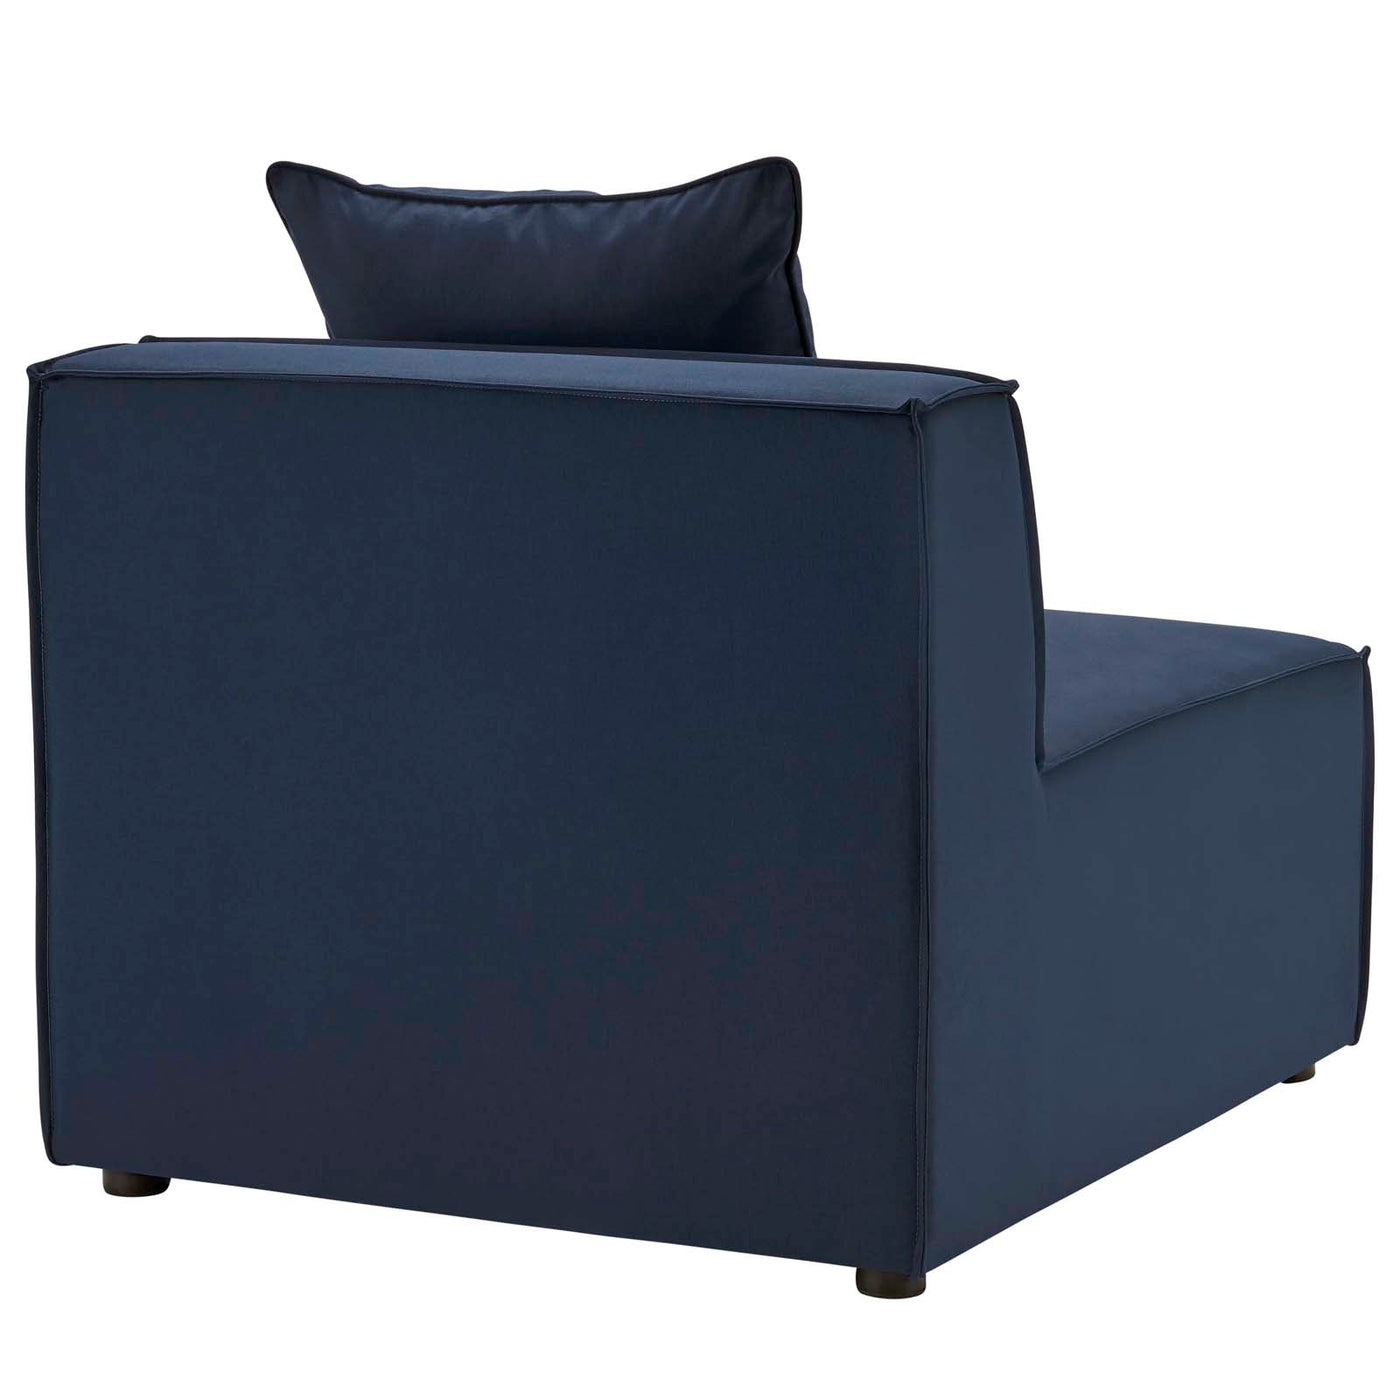 Saybrook Outdoor Patio Upholstered 8-Piece Sectional Sofa